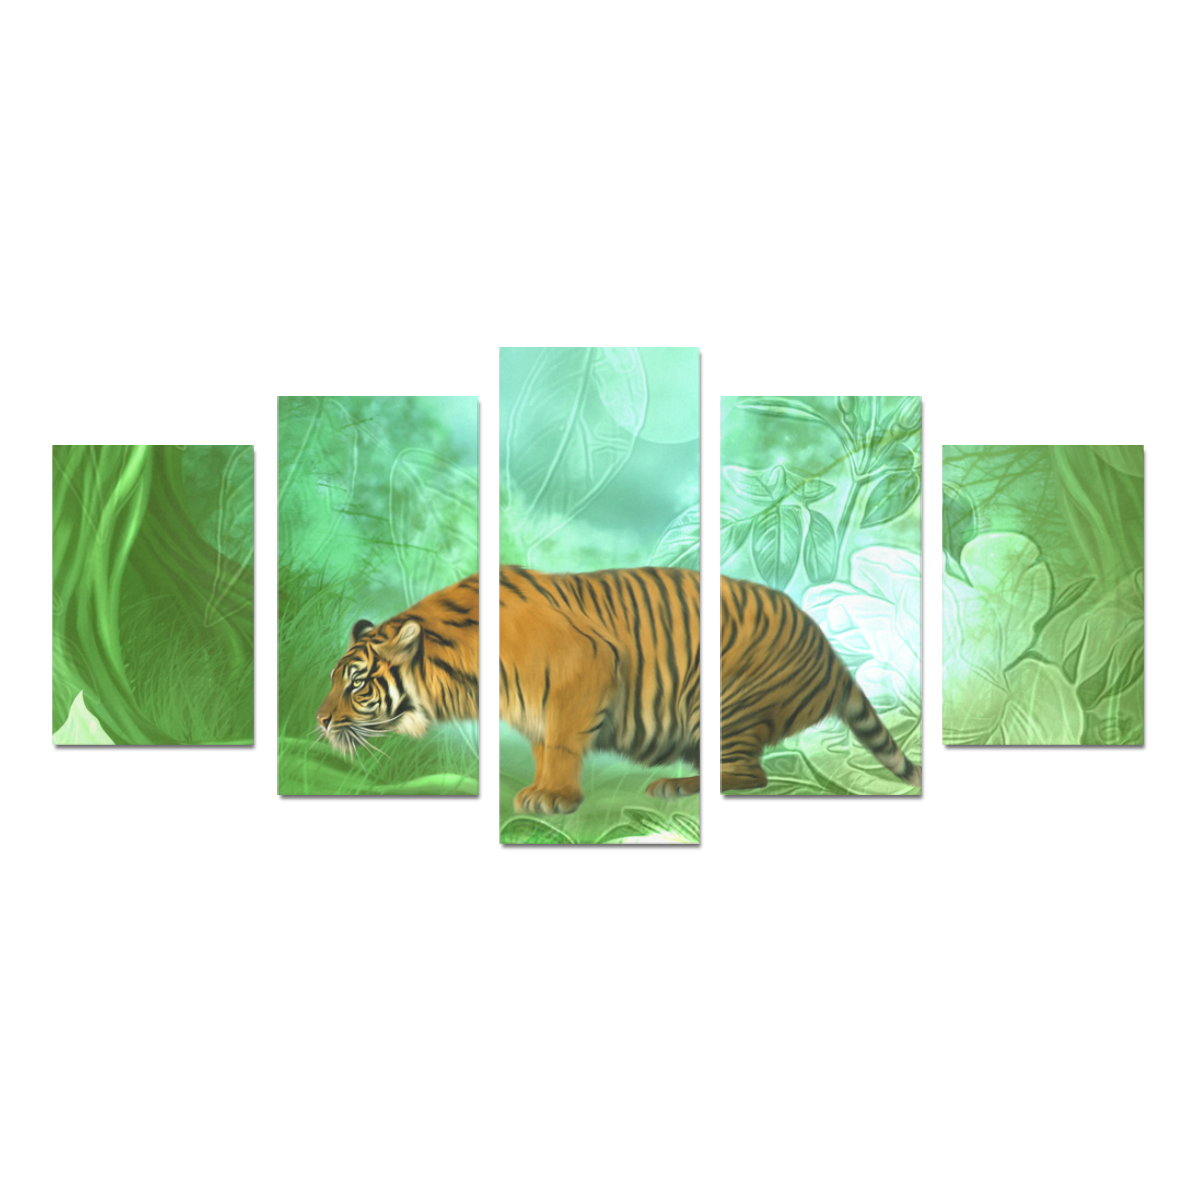 Awesome tiger, fantasy world Canvas Print Sets D (No Frame)